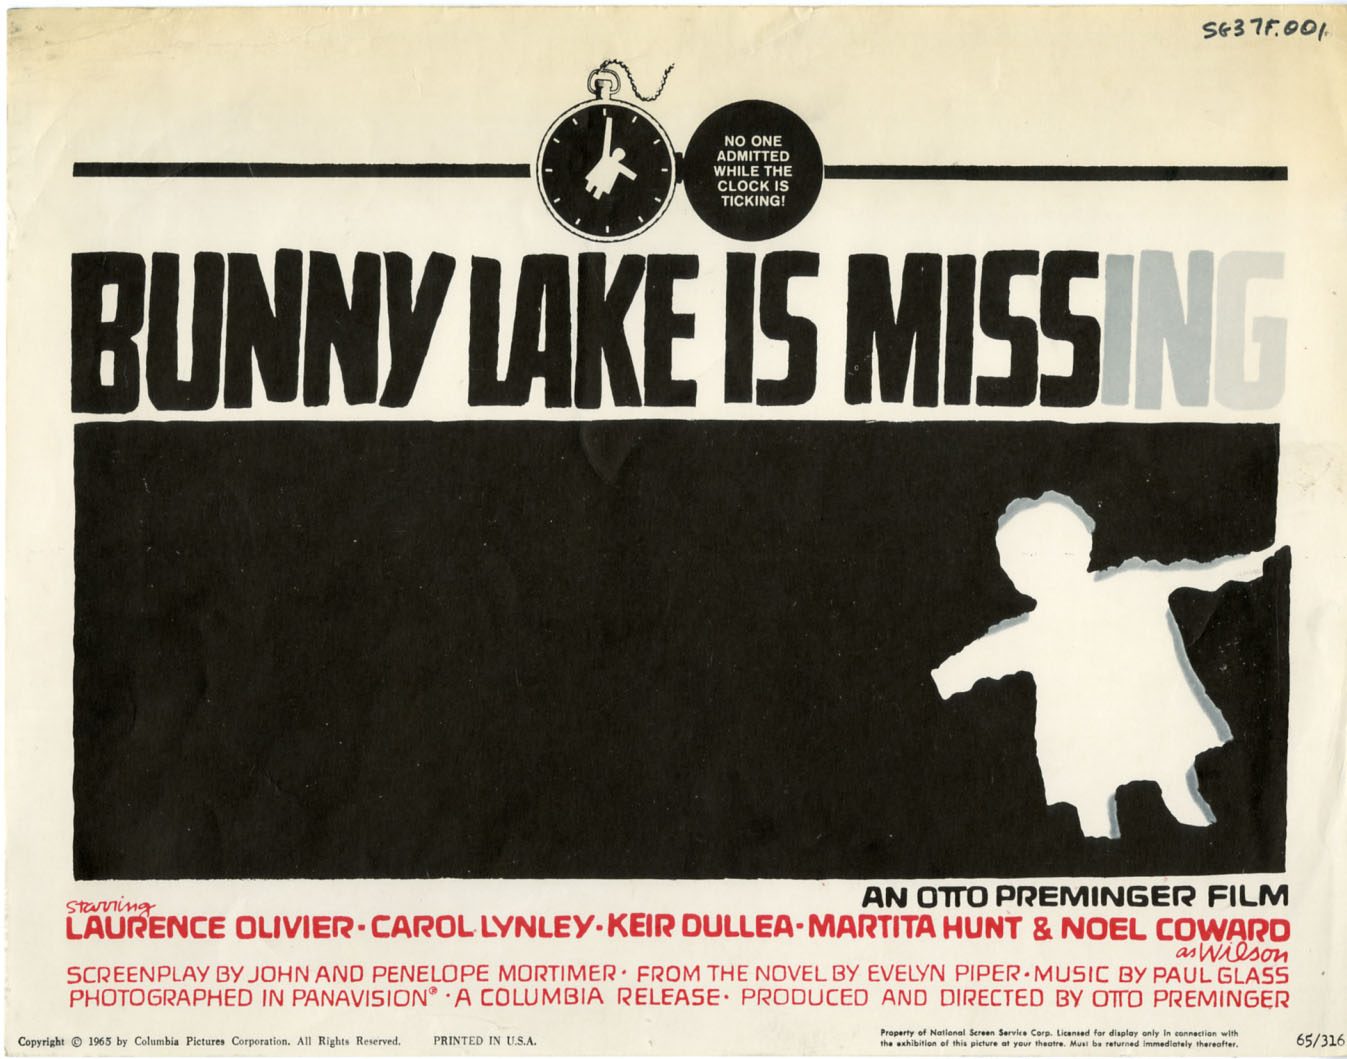 Bunny Lake Films